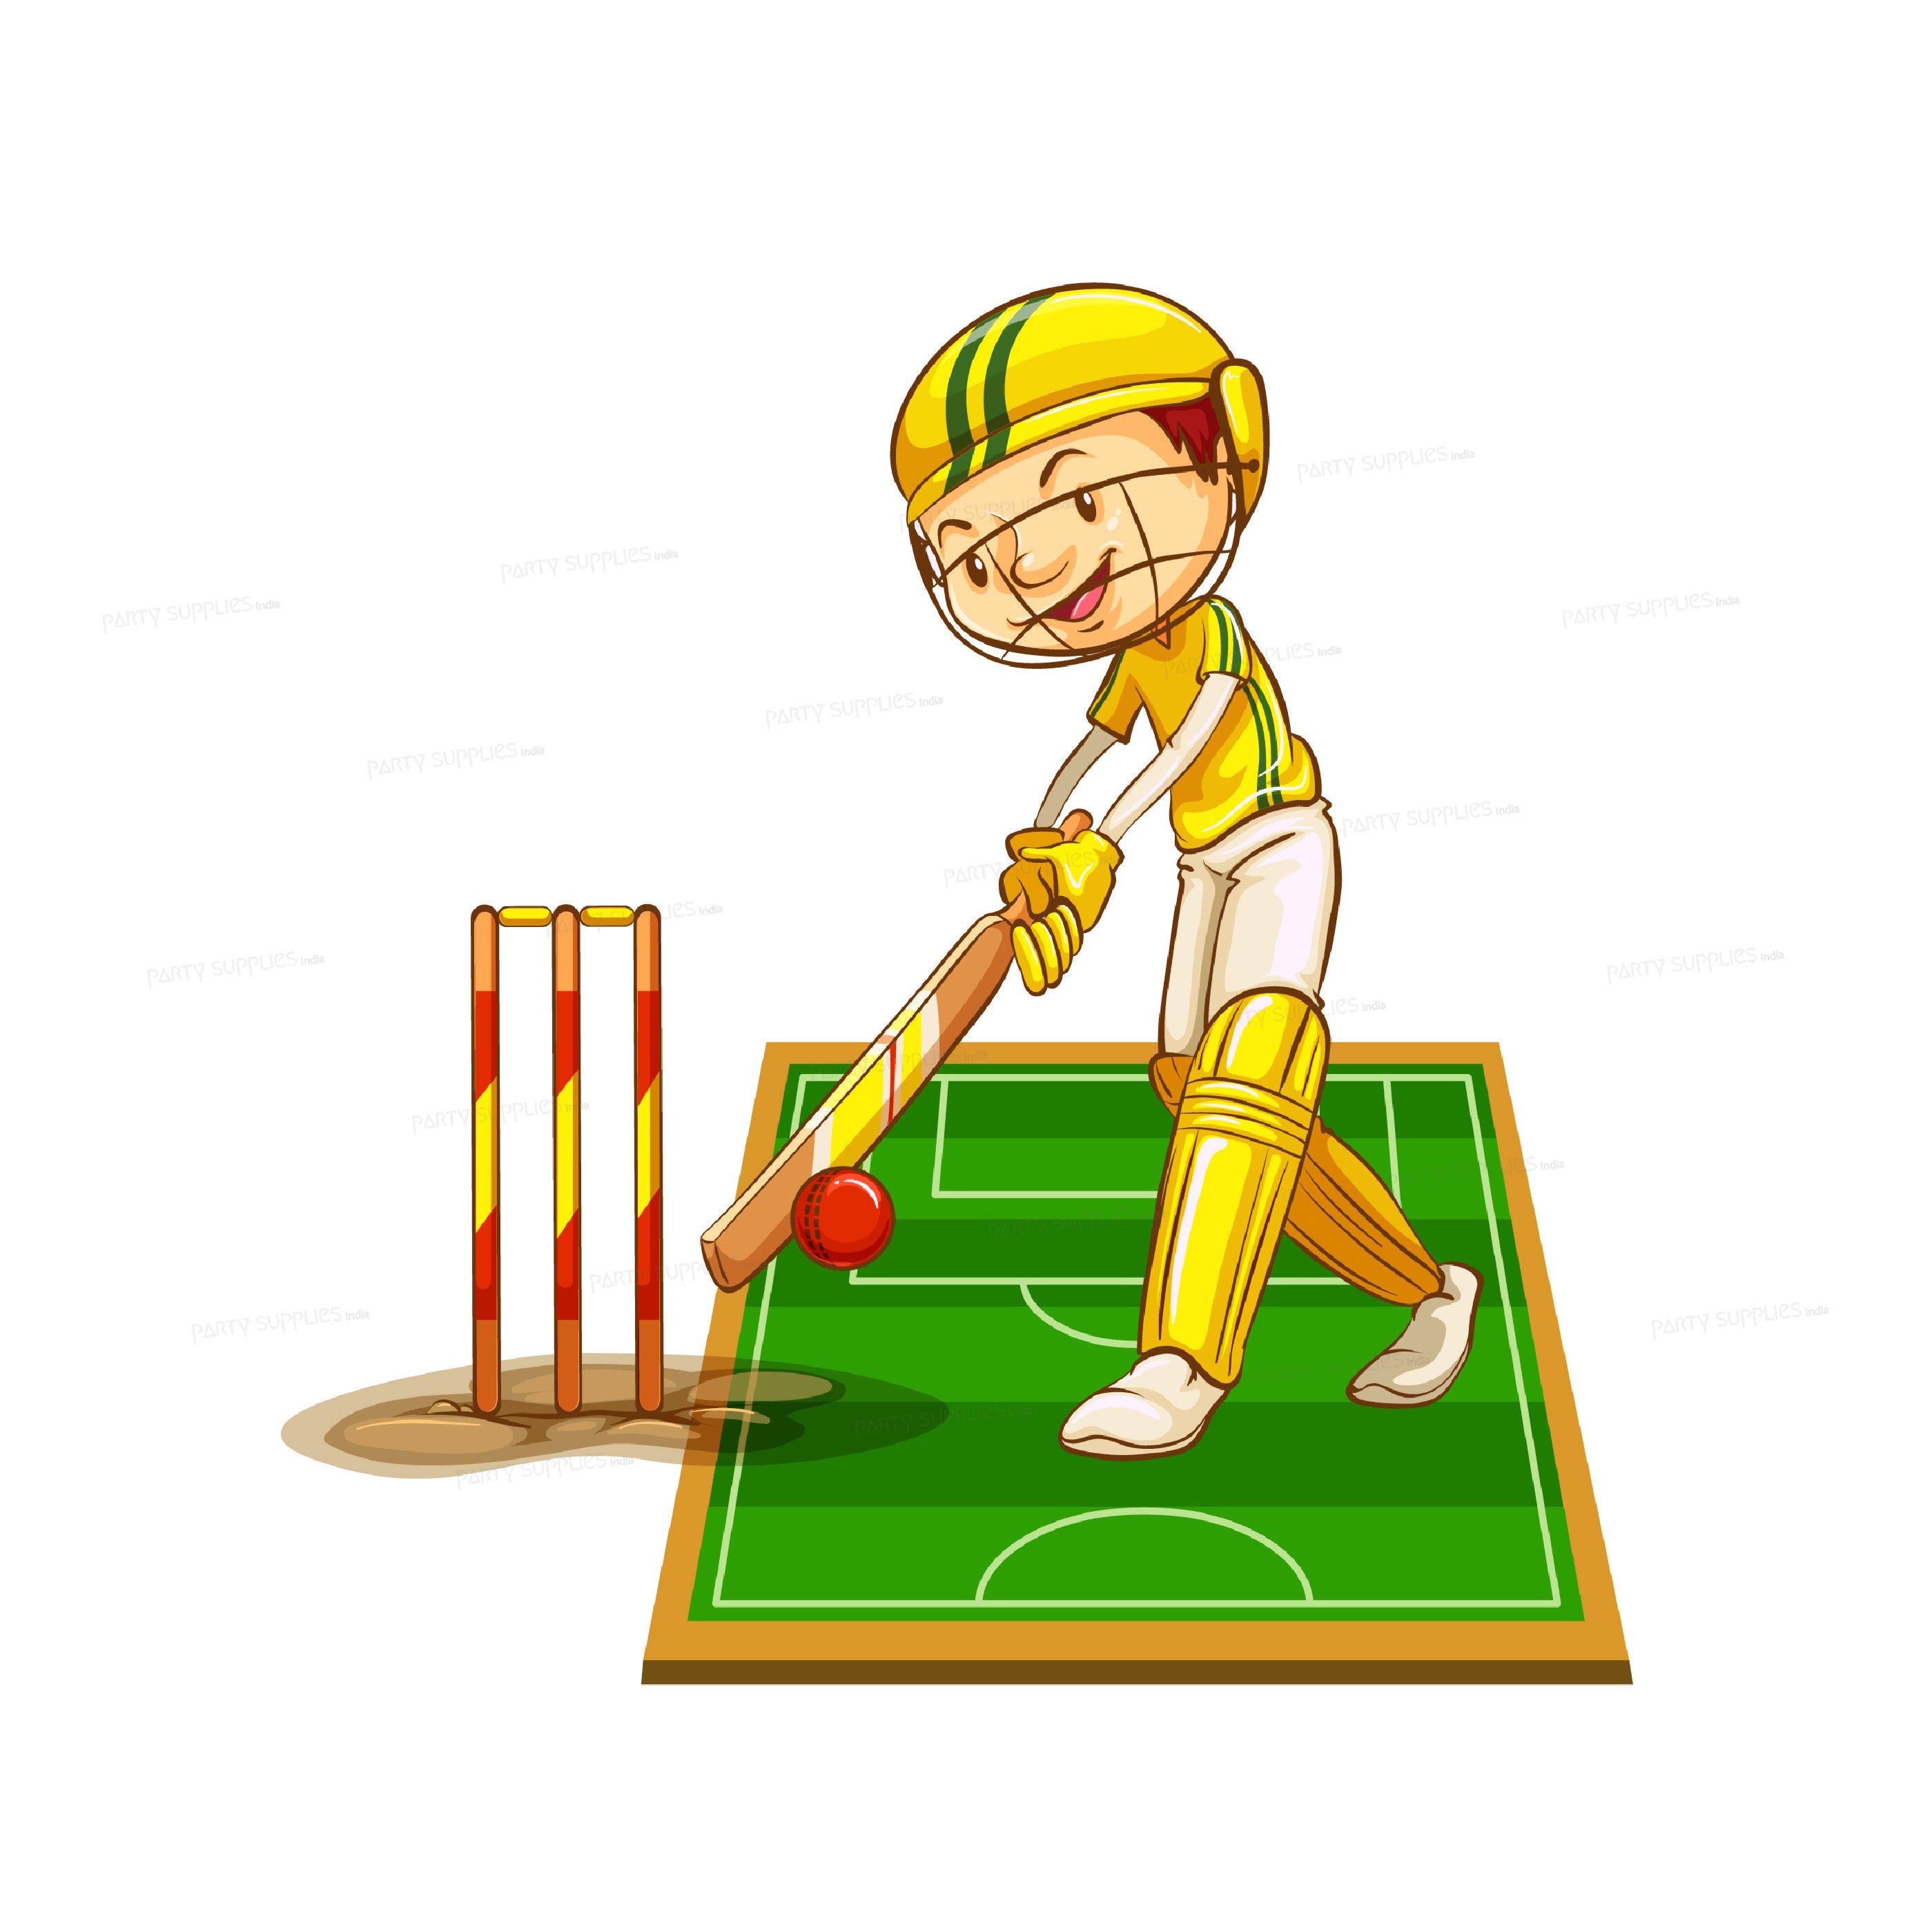 PSI Cricket Theme Cutout - 02